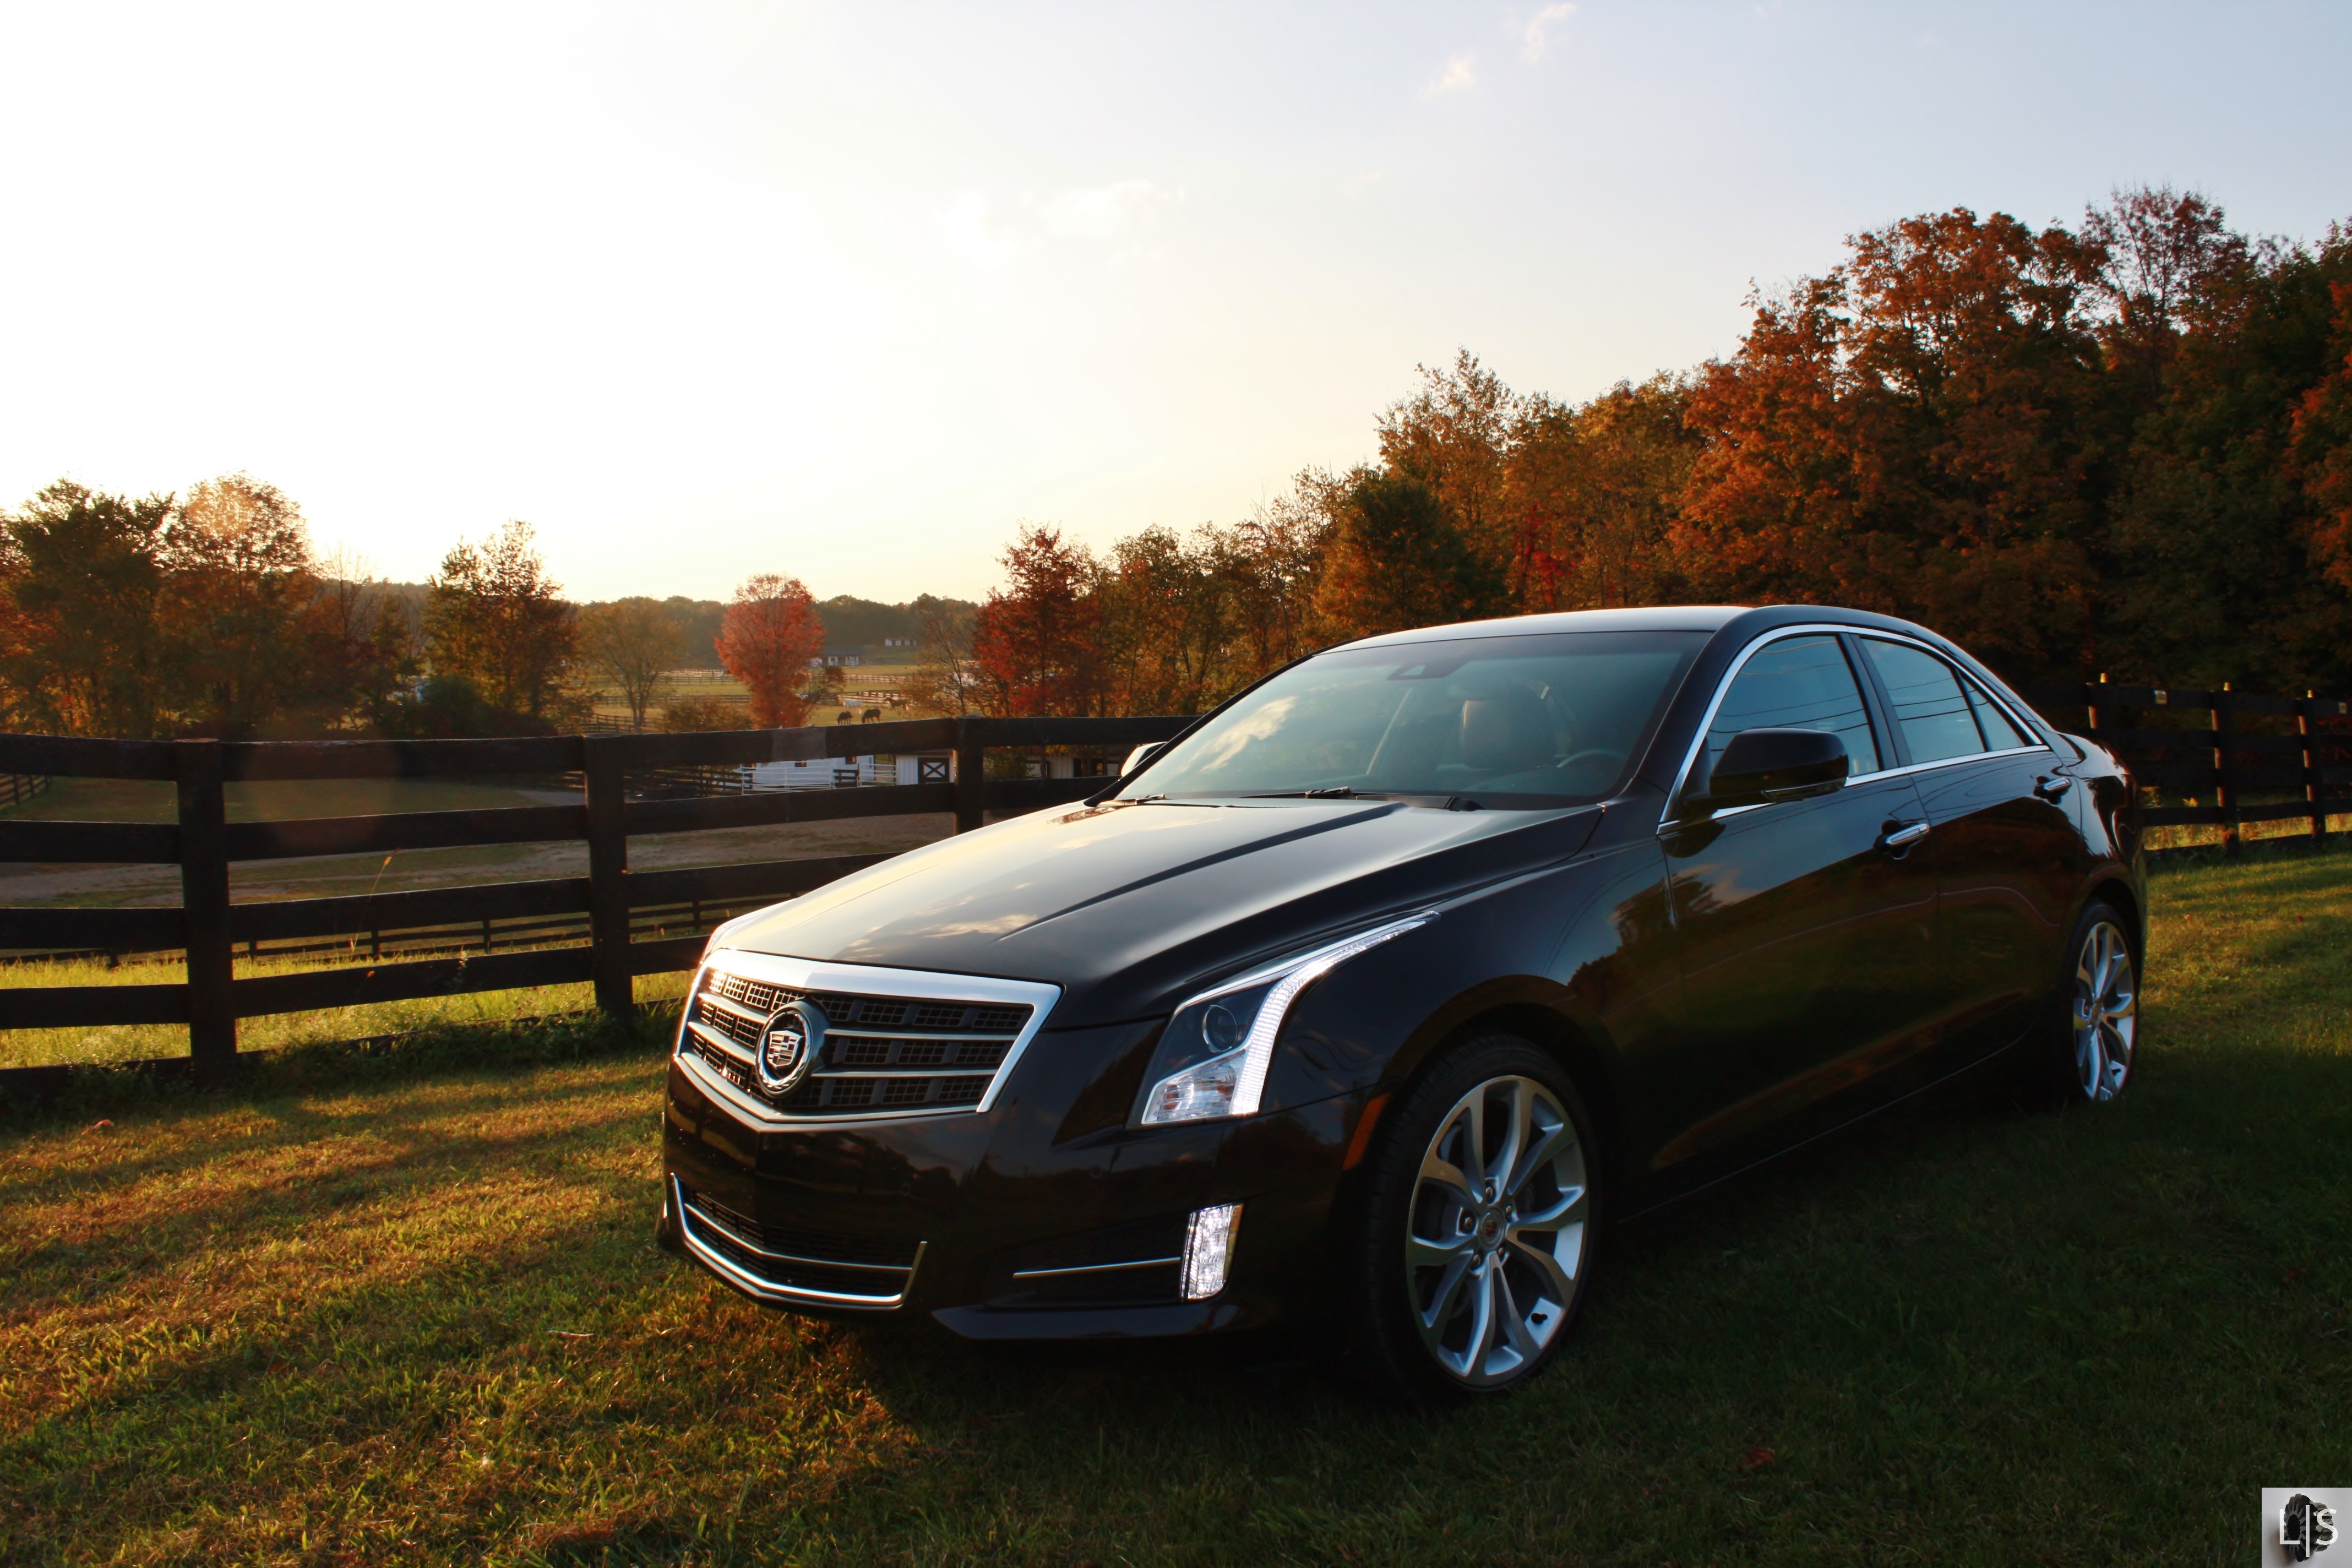 Aggressively Elegant: 2014 Cadillac ATS | Limited Slip Blog